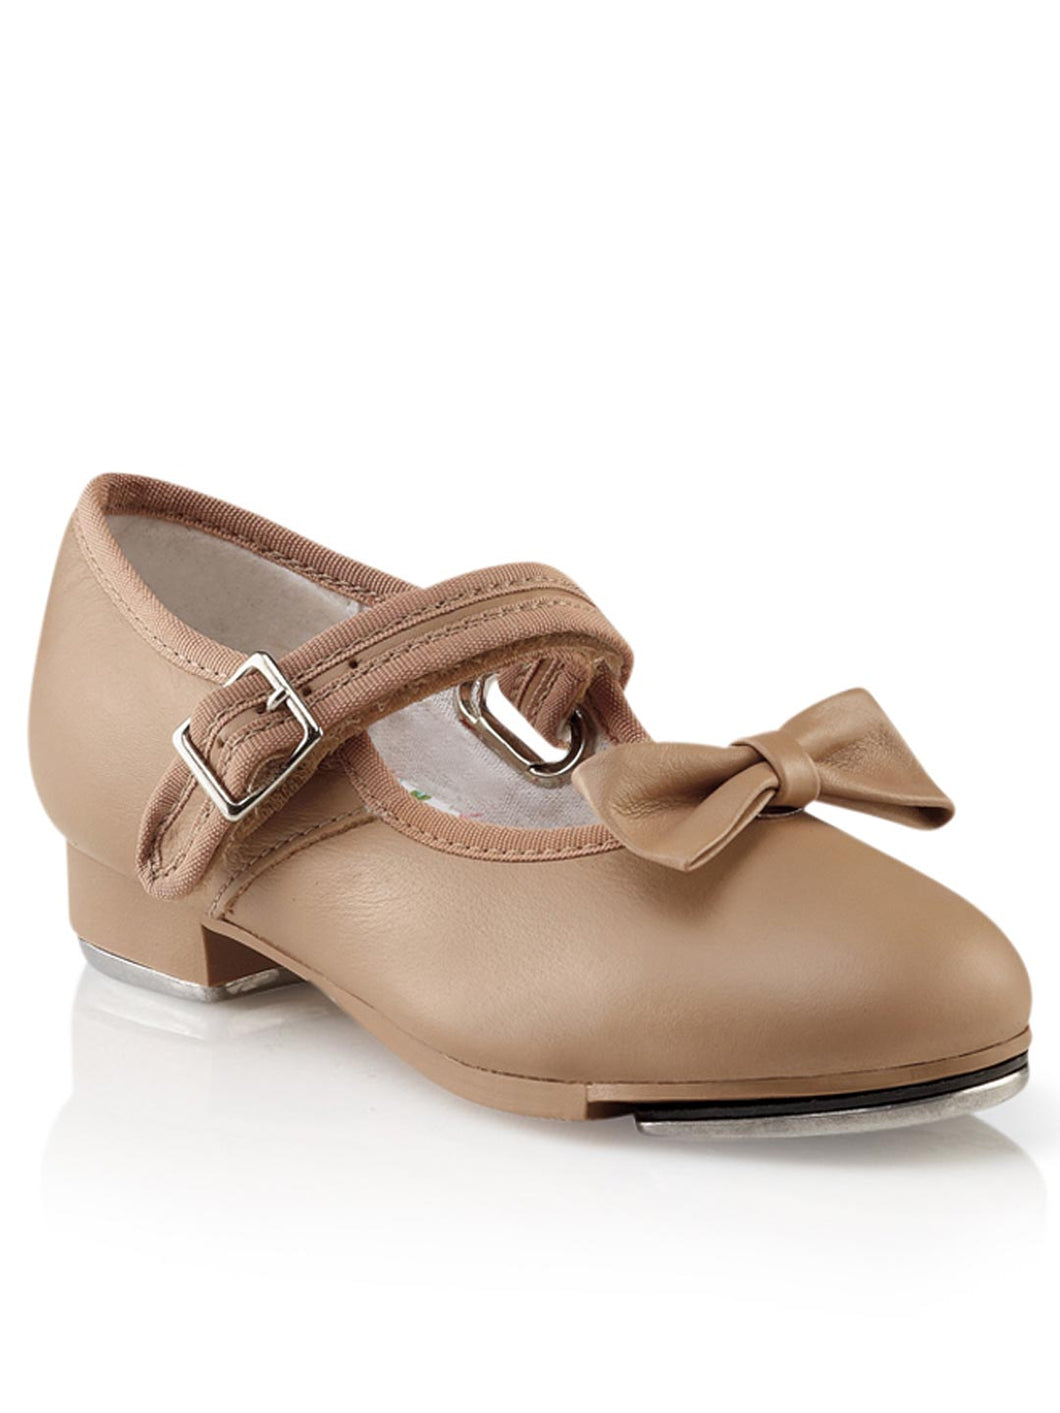 Capezio Mary Jane Buckle Tap Shoes - Caramel #3800